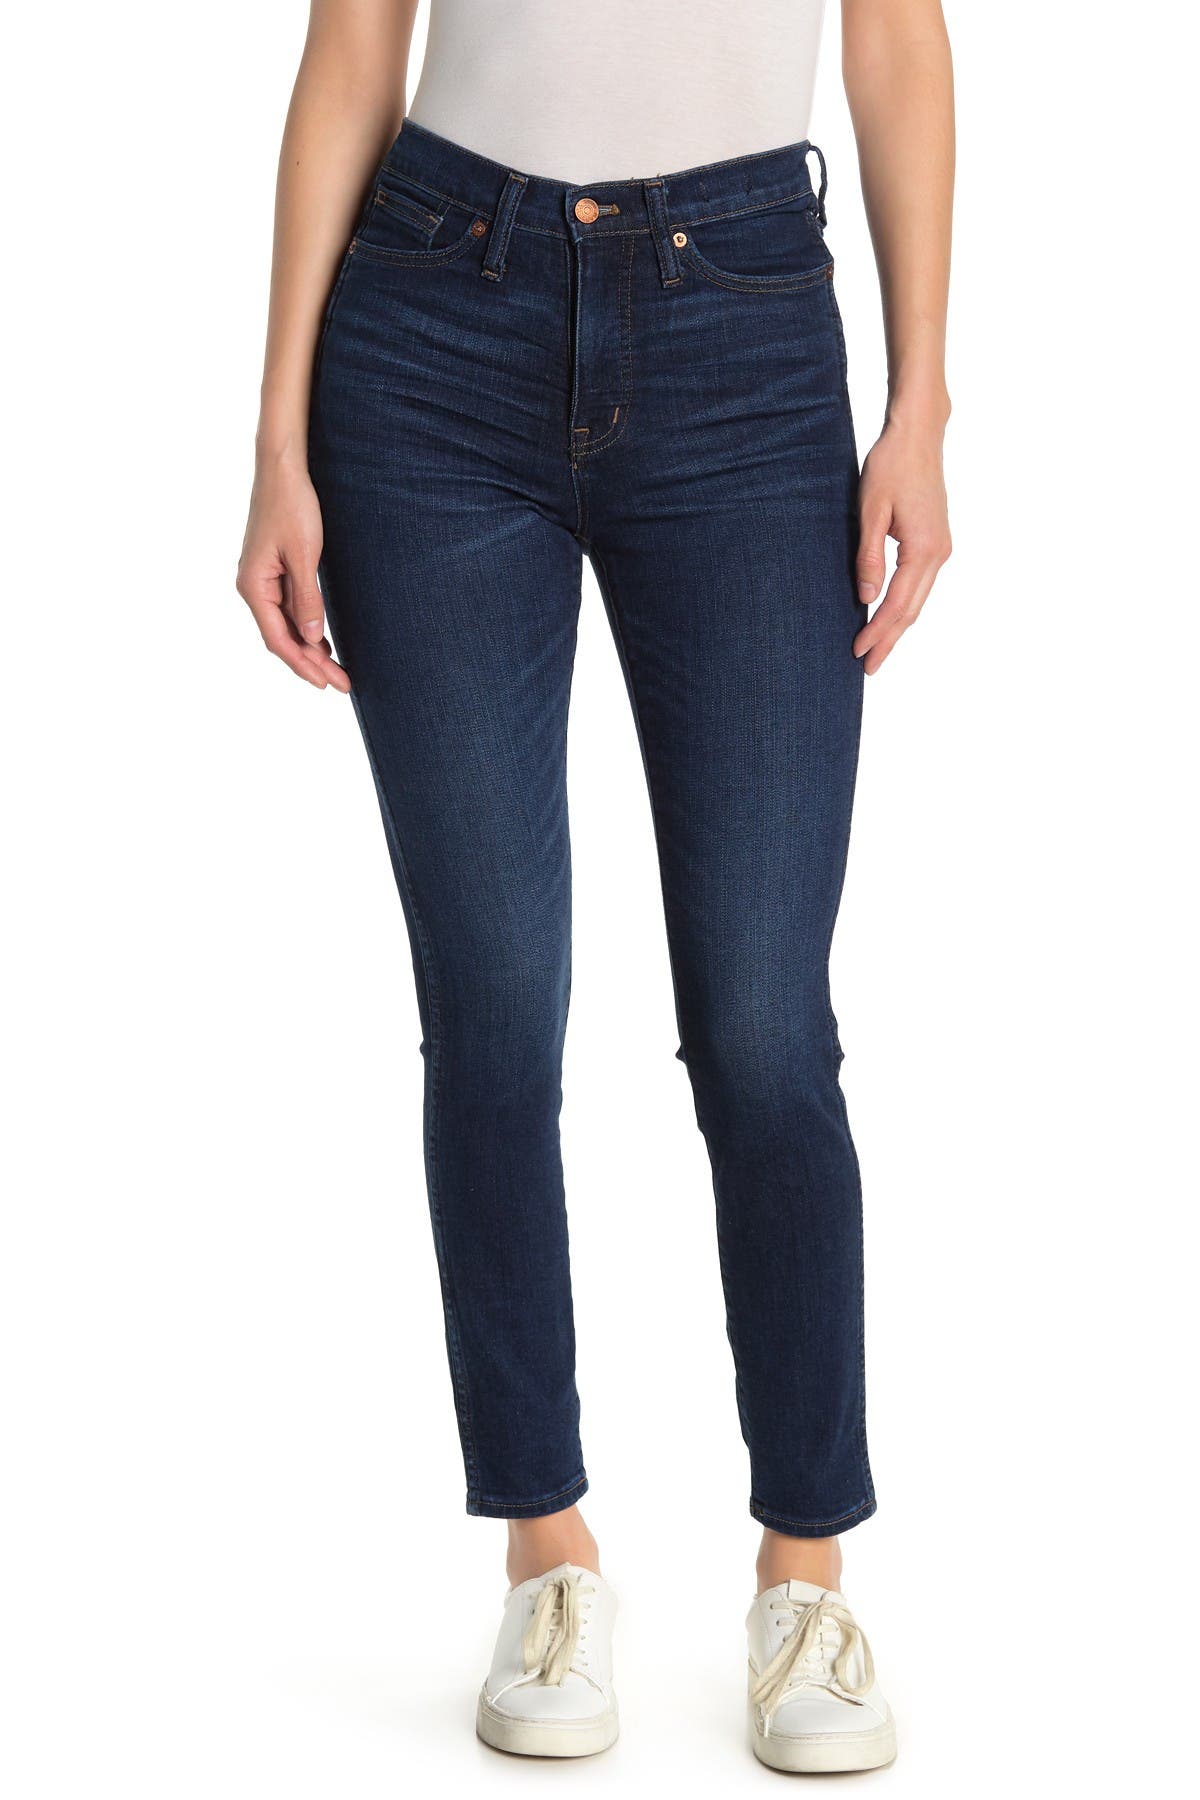 madewell high waist skinny jeans